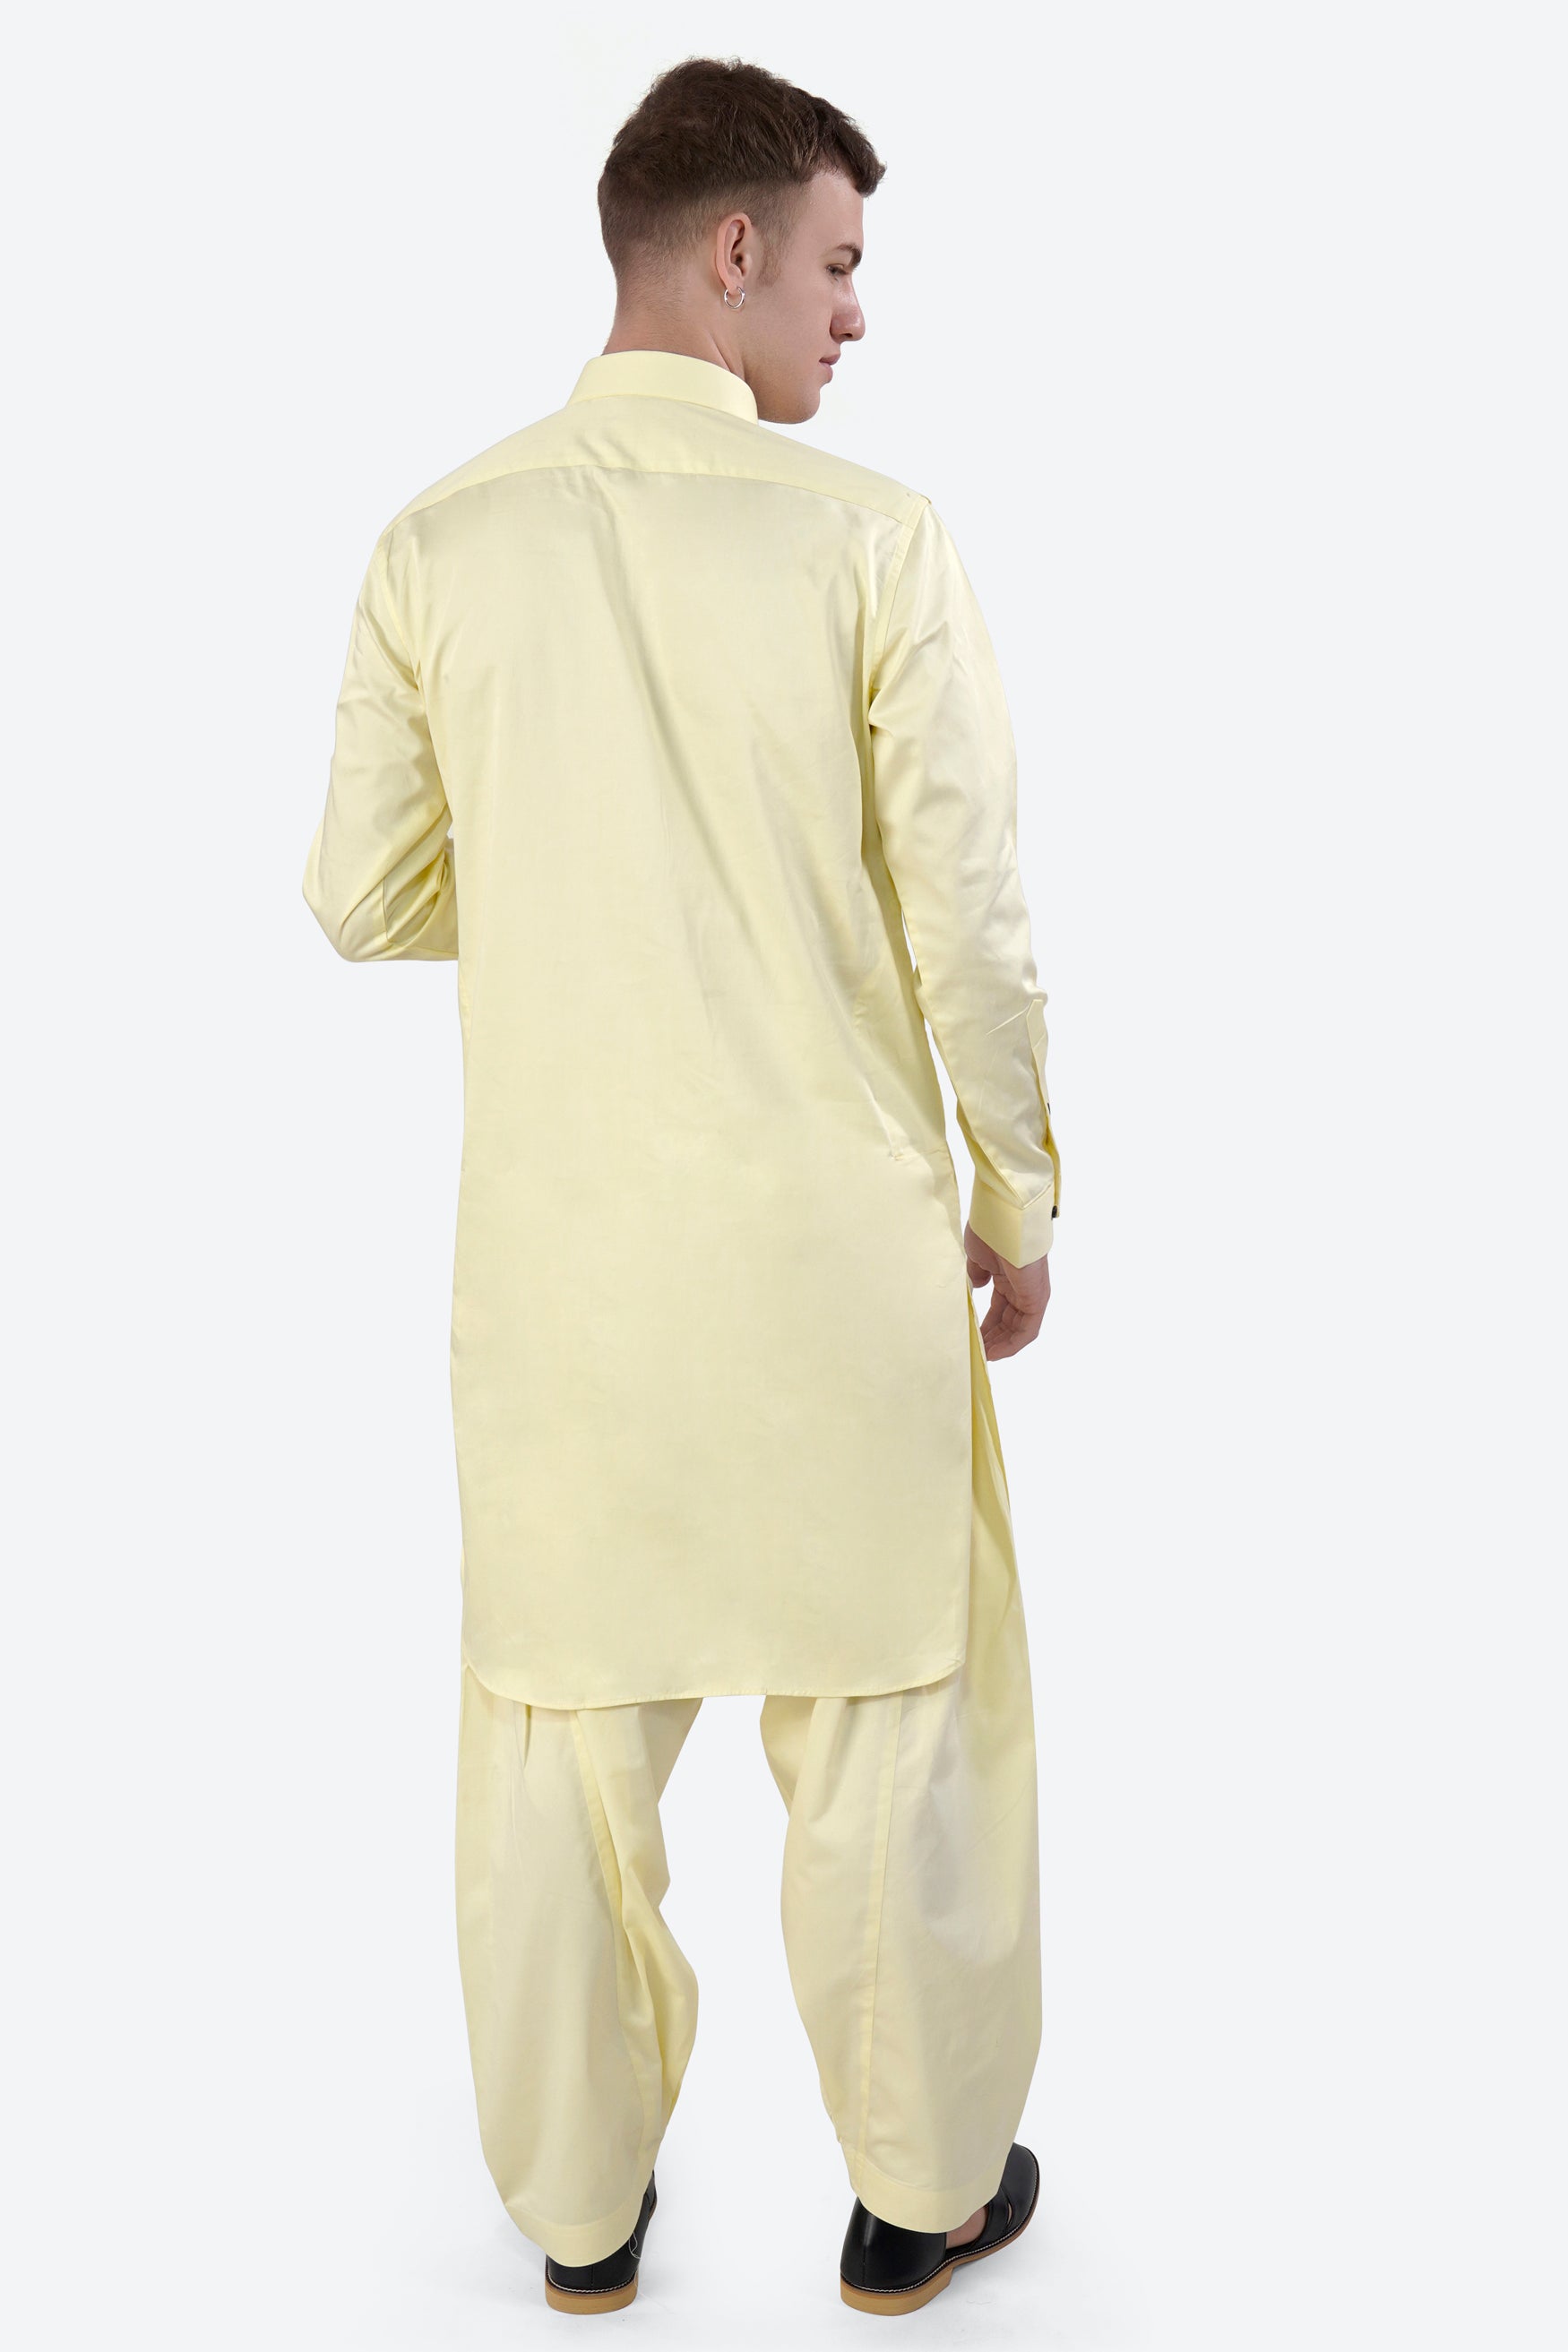 Oasis Yellow Subtle Sheen Super Soft Premium Cotton Pathani